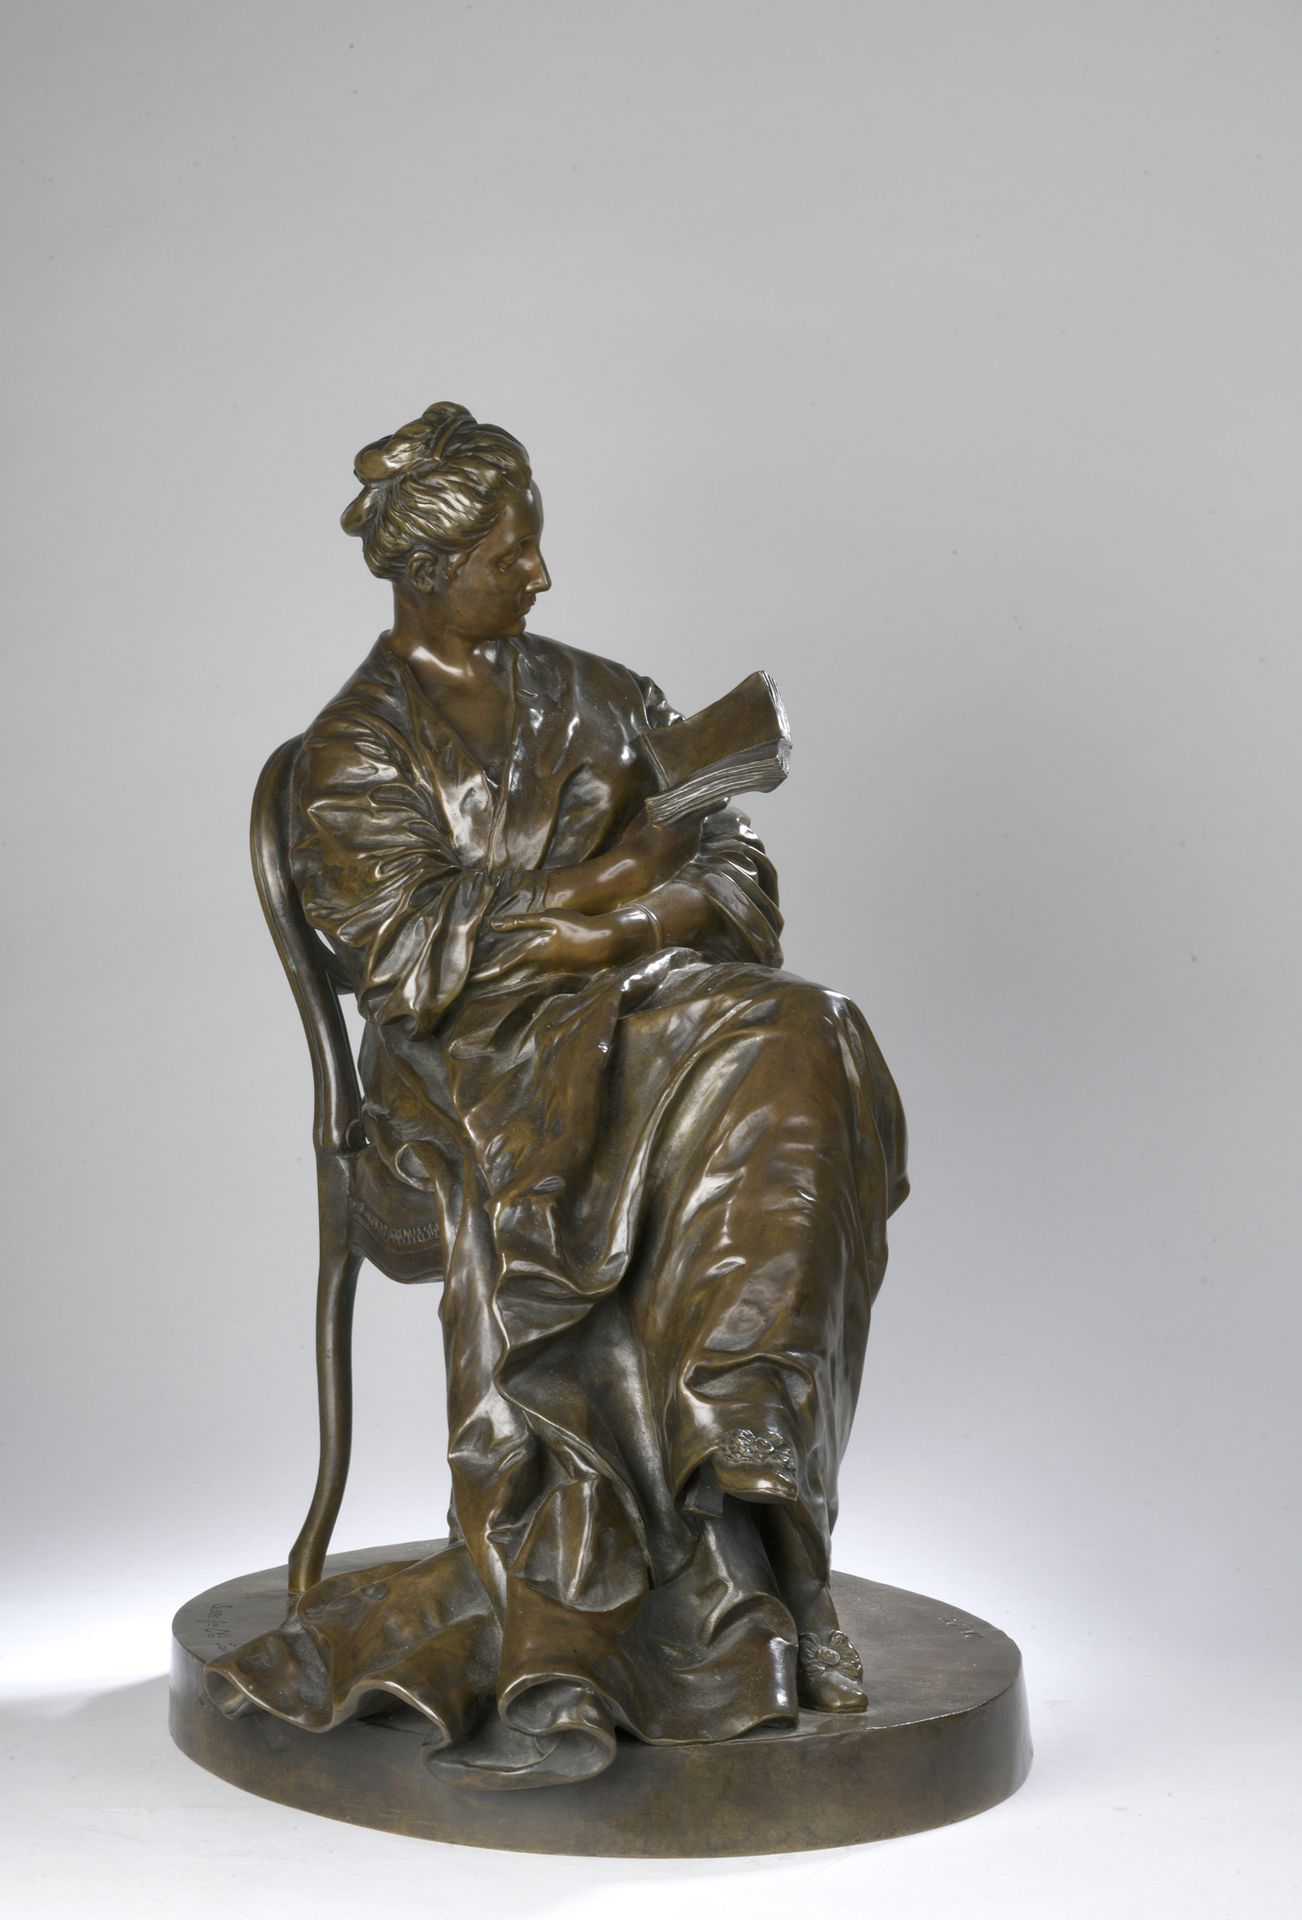 Null 艾梅-儒勒-达鲁(1838-1902)

阅读灯

模型创建于1877年。

青铜，带有浅棕色的铜锈。

在露台上签名的DALOU。

印有创始人的标&hellip;